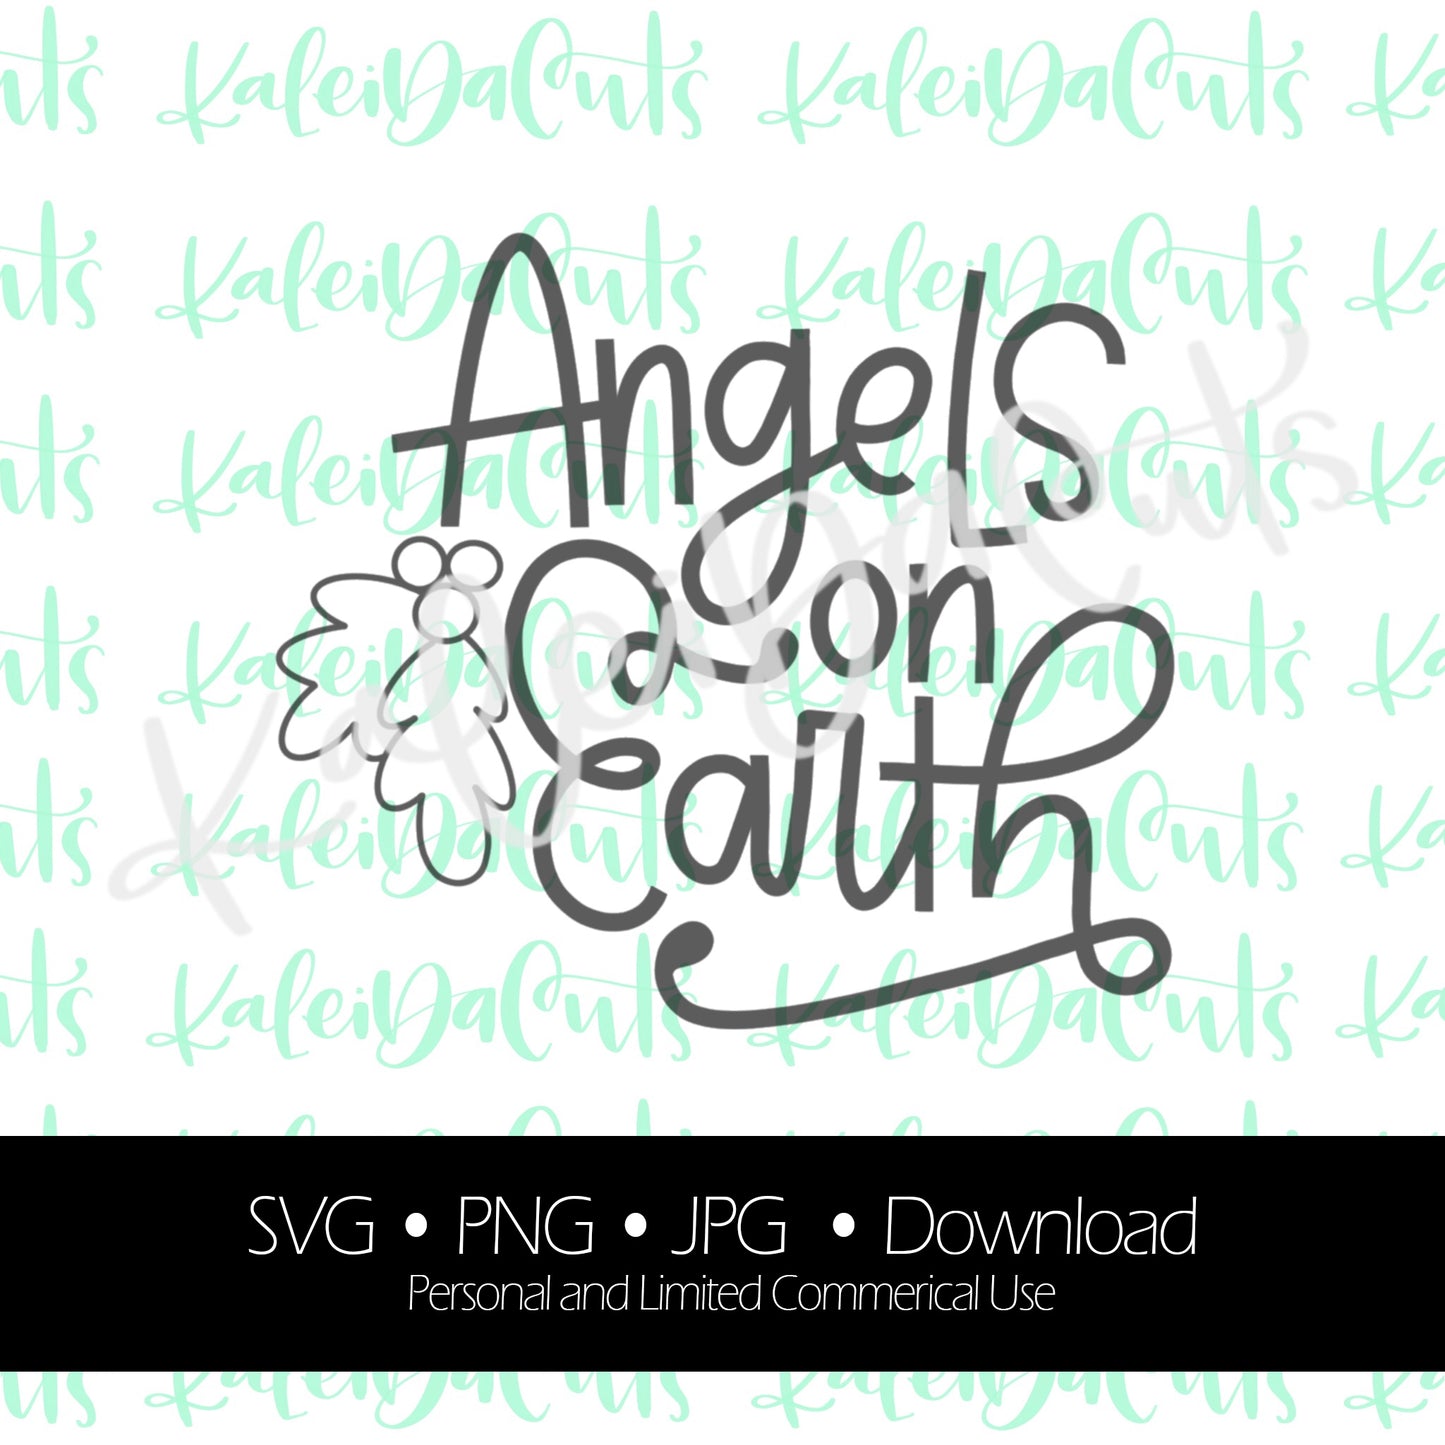 Angels on Earth Digital Download. KaleidaCuts Lettering.